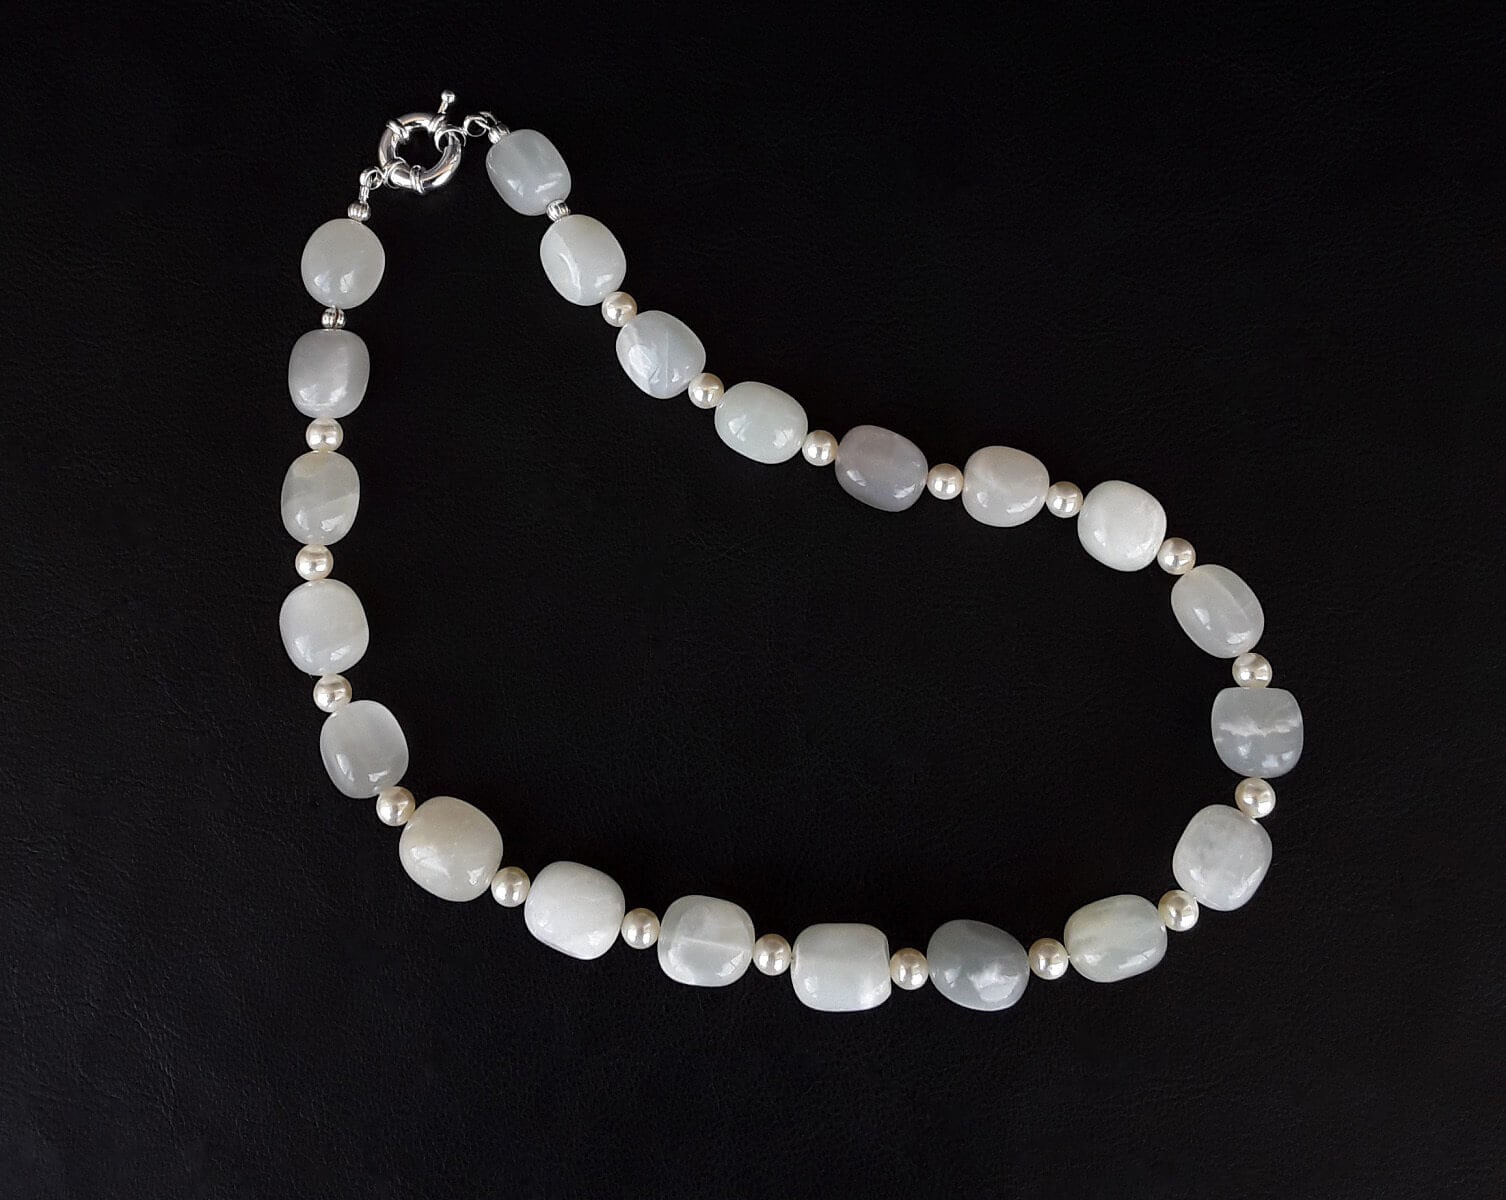 White Pearl Advanced Charm Necklace made of Swarovski | Etsy